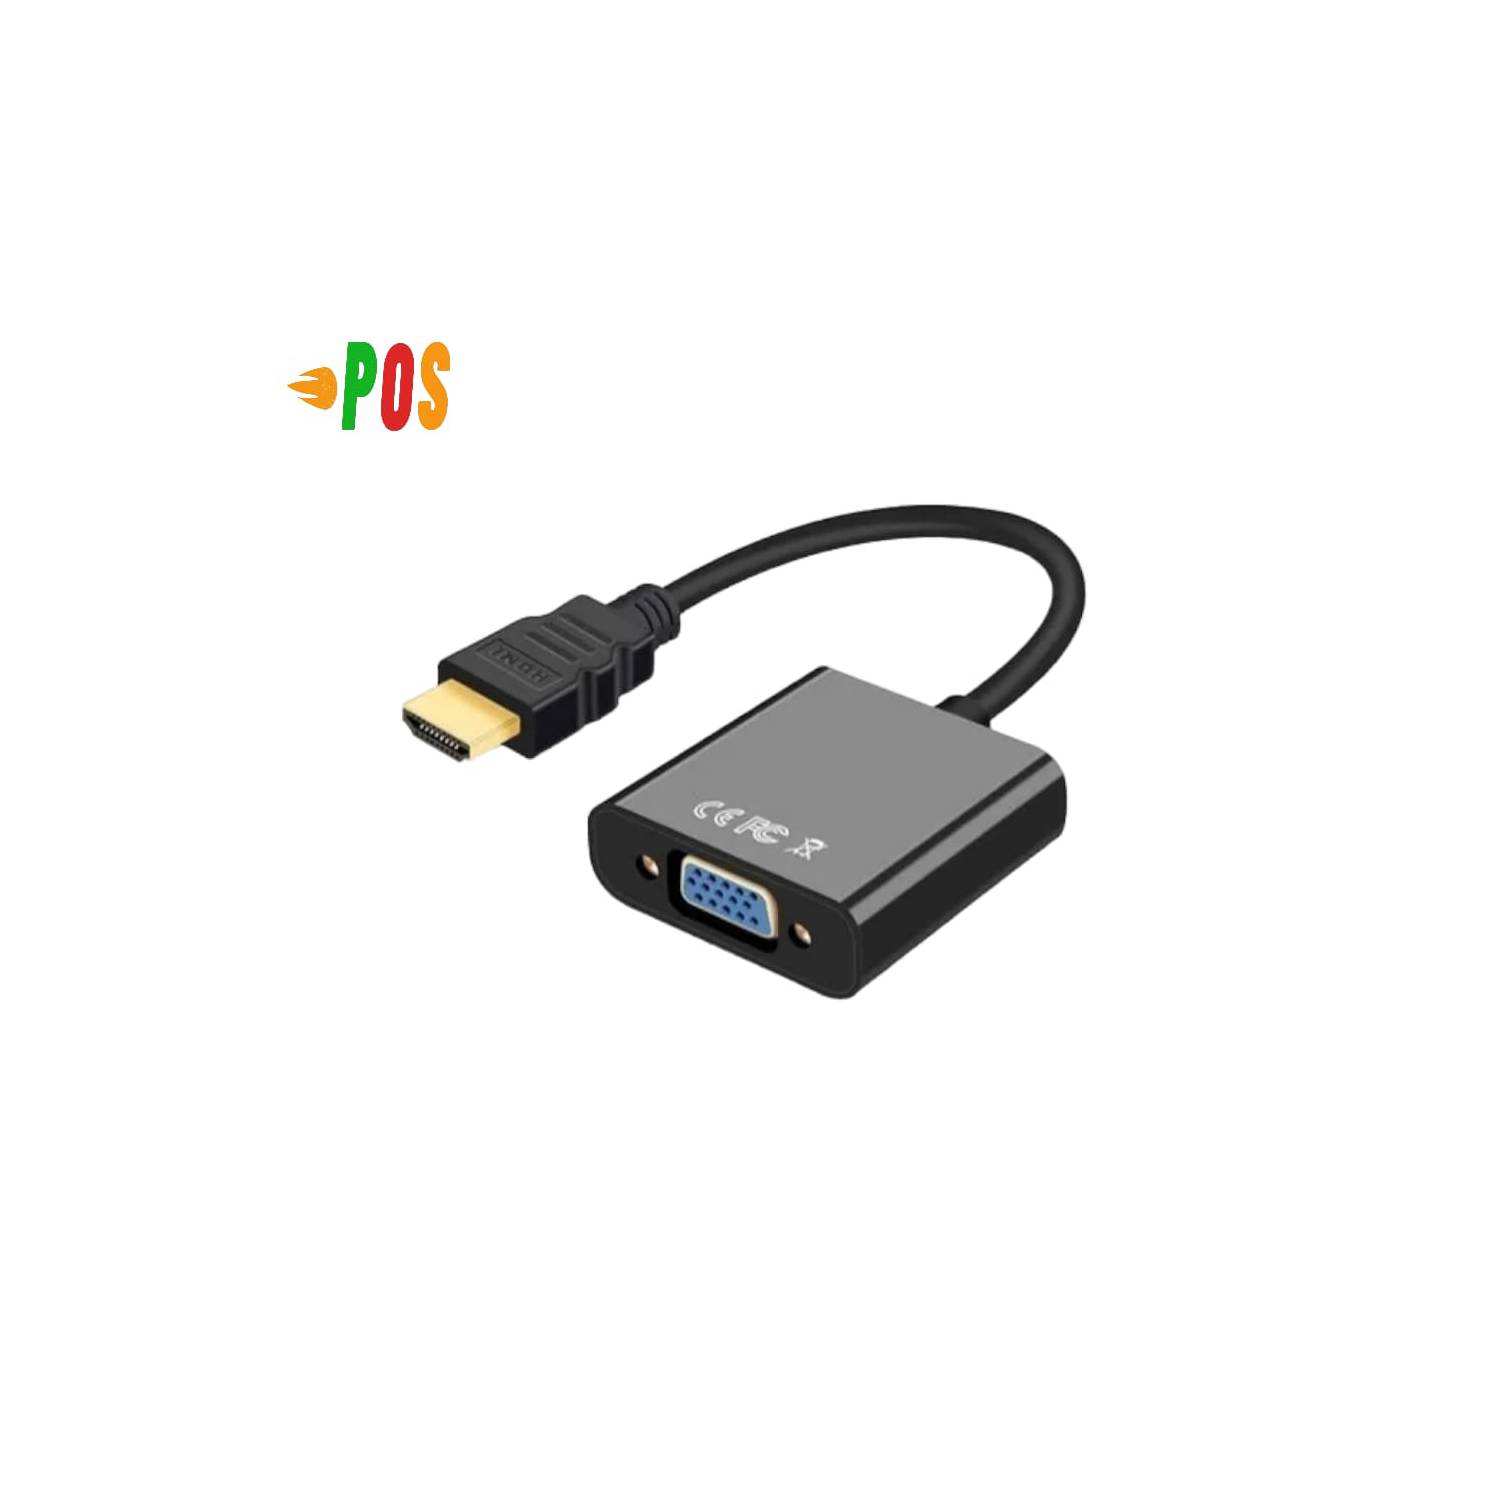 GENERICO Cable Adaptador Convertidor HDMI VGA